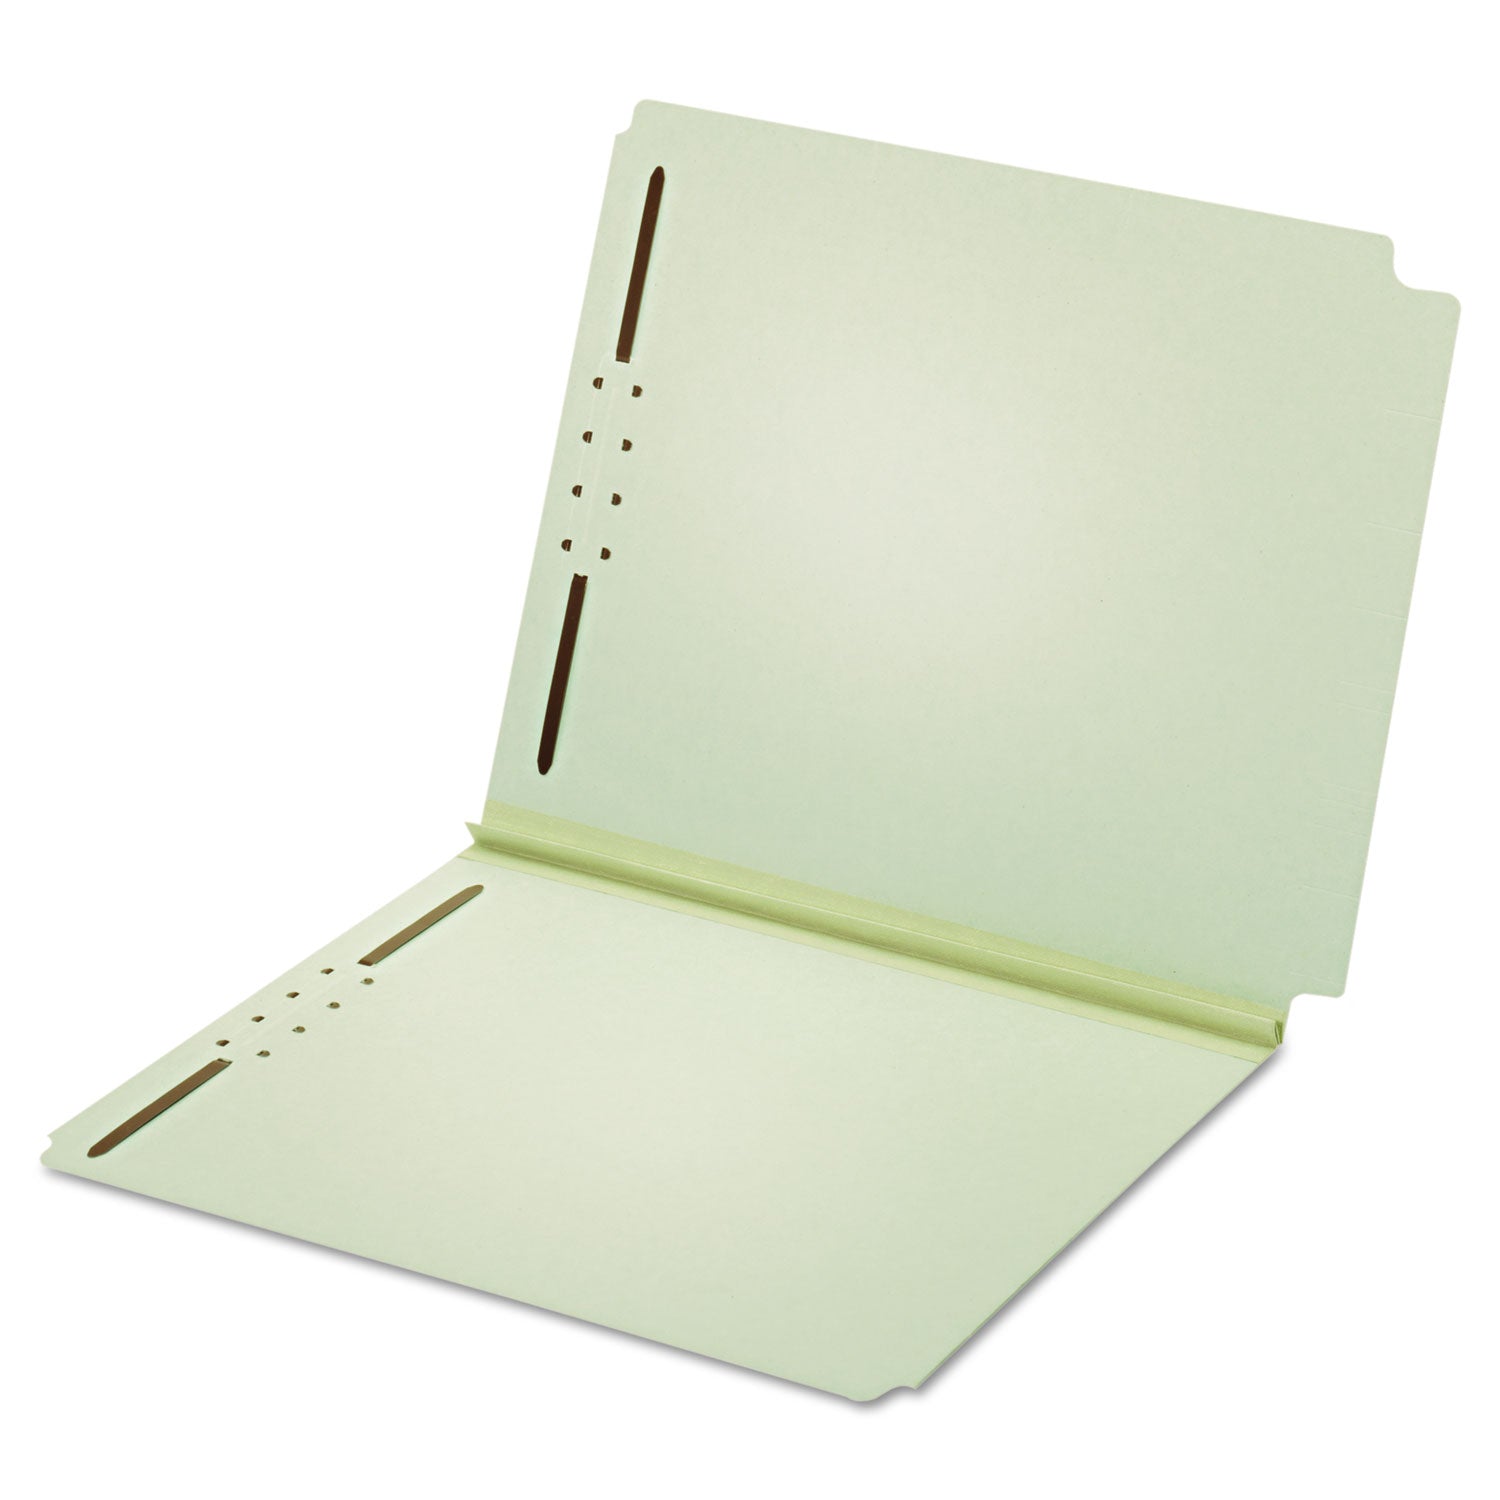 Dual-Tab Pressboard Fastener Folder, 2" Expansion, 2 Fasteners, Letter Size, Light Green Exterior, 25/Box - 